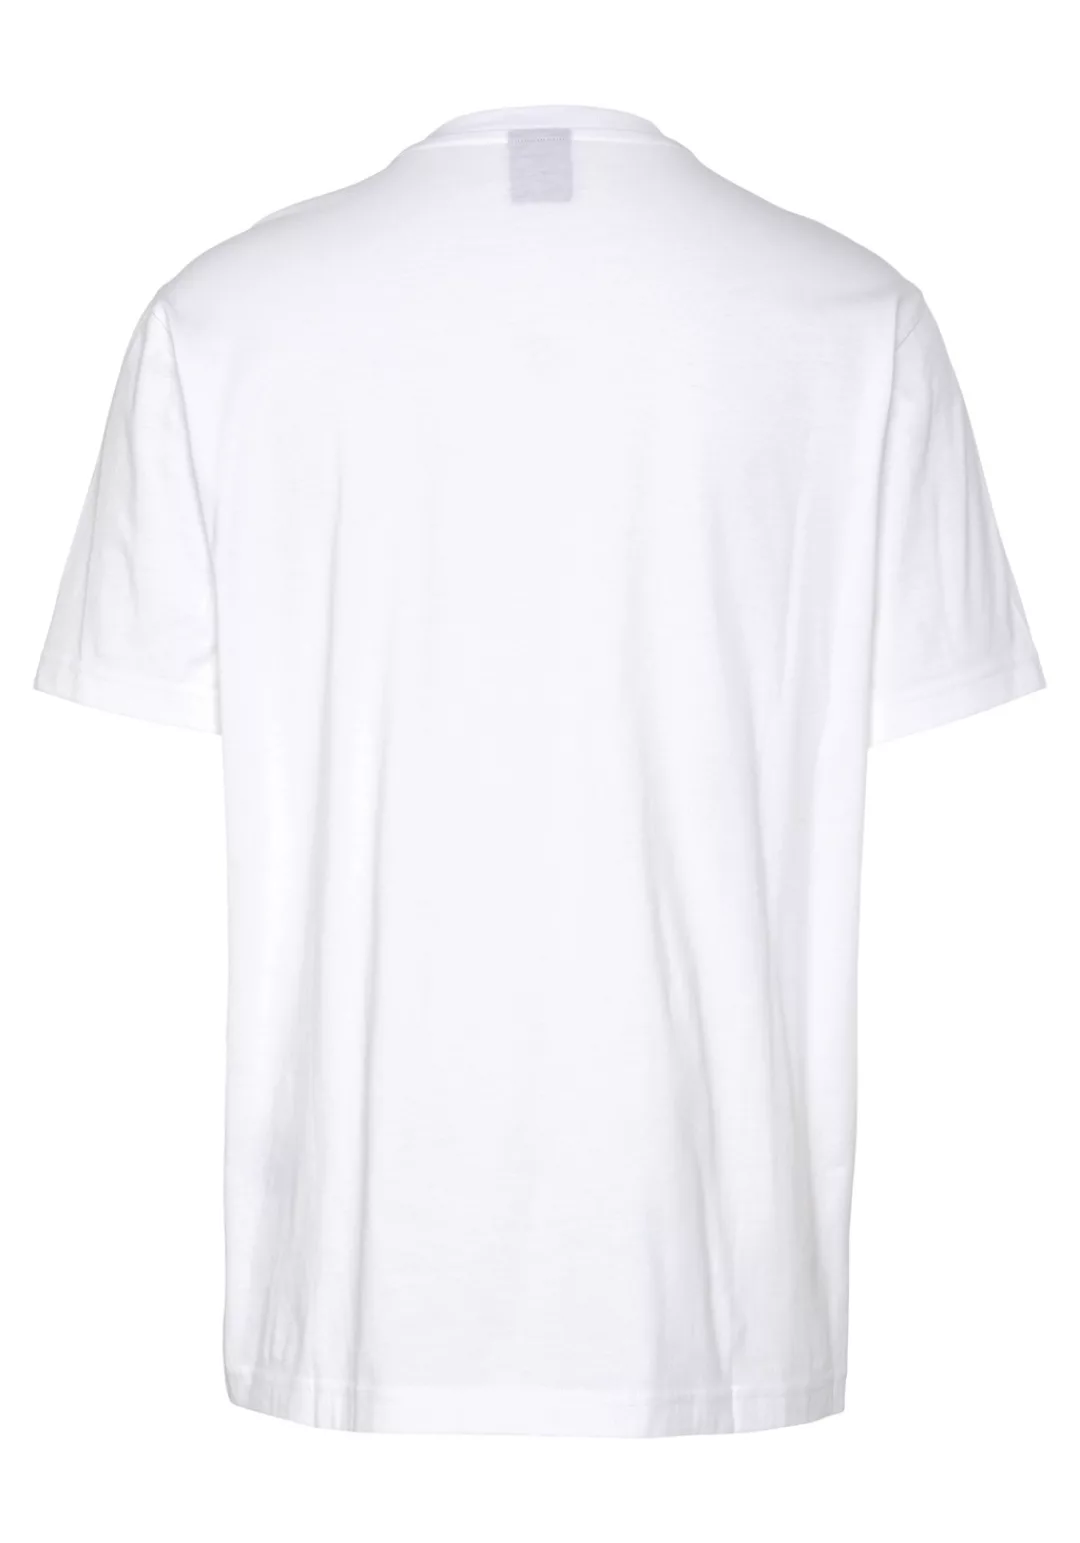 Champion T-Shirt "Classic Crewneck T-Shirt large Logo" günstig online kaufen